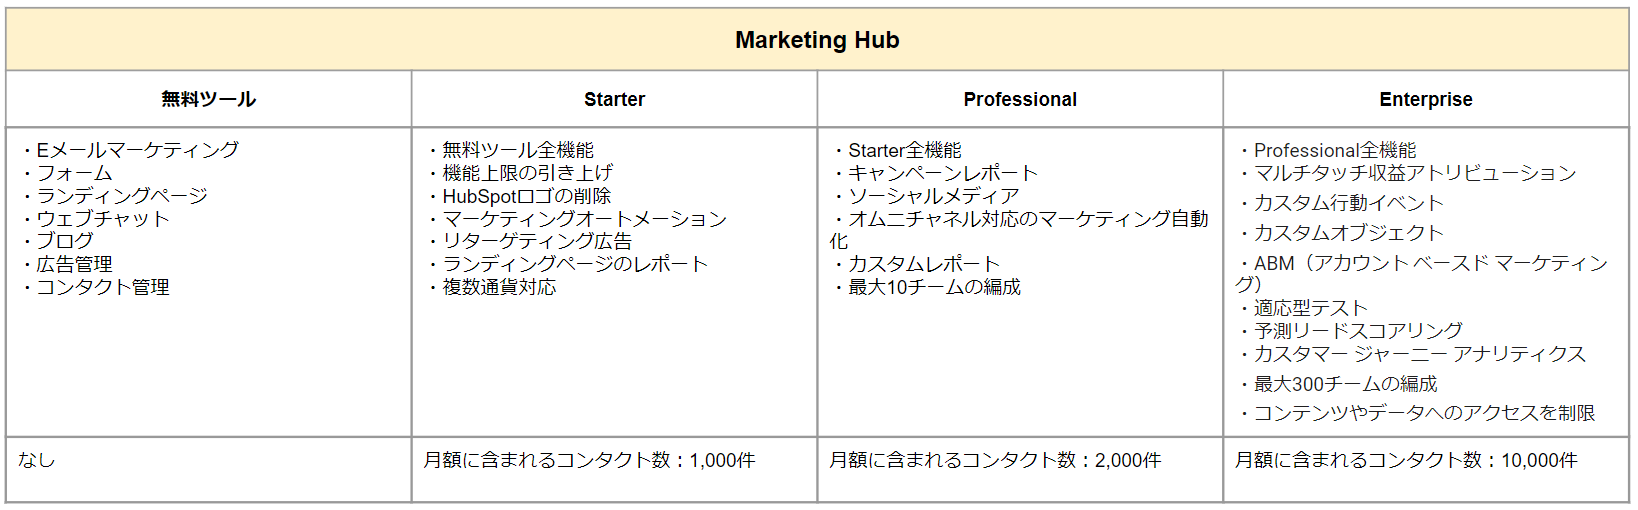 Marketing Hub 無料版と有料版の違い